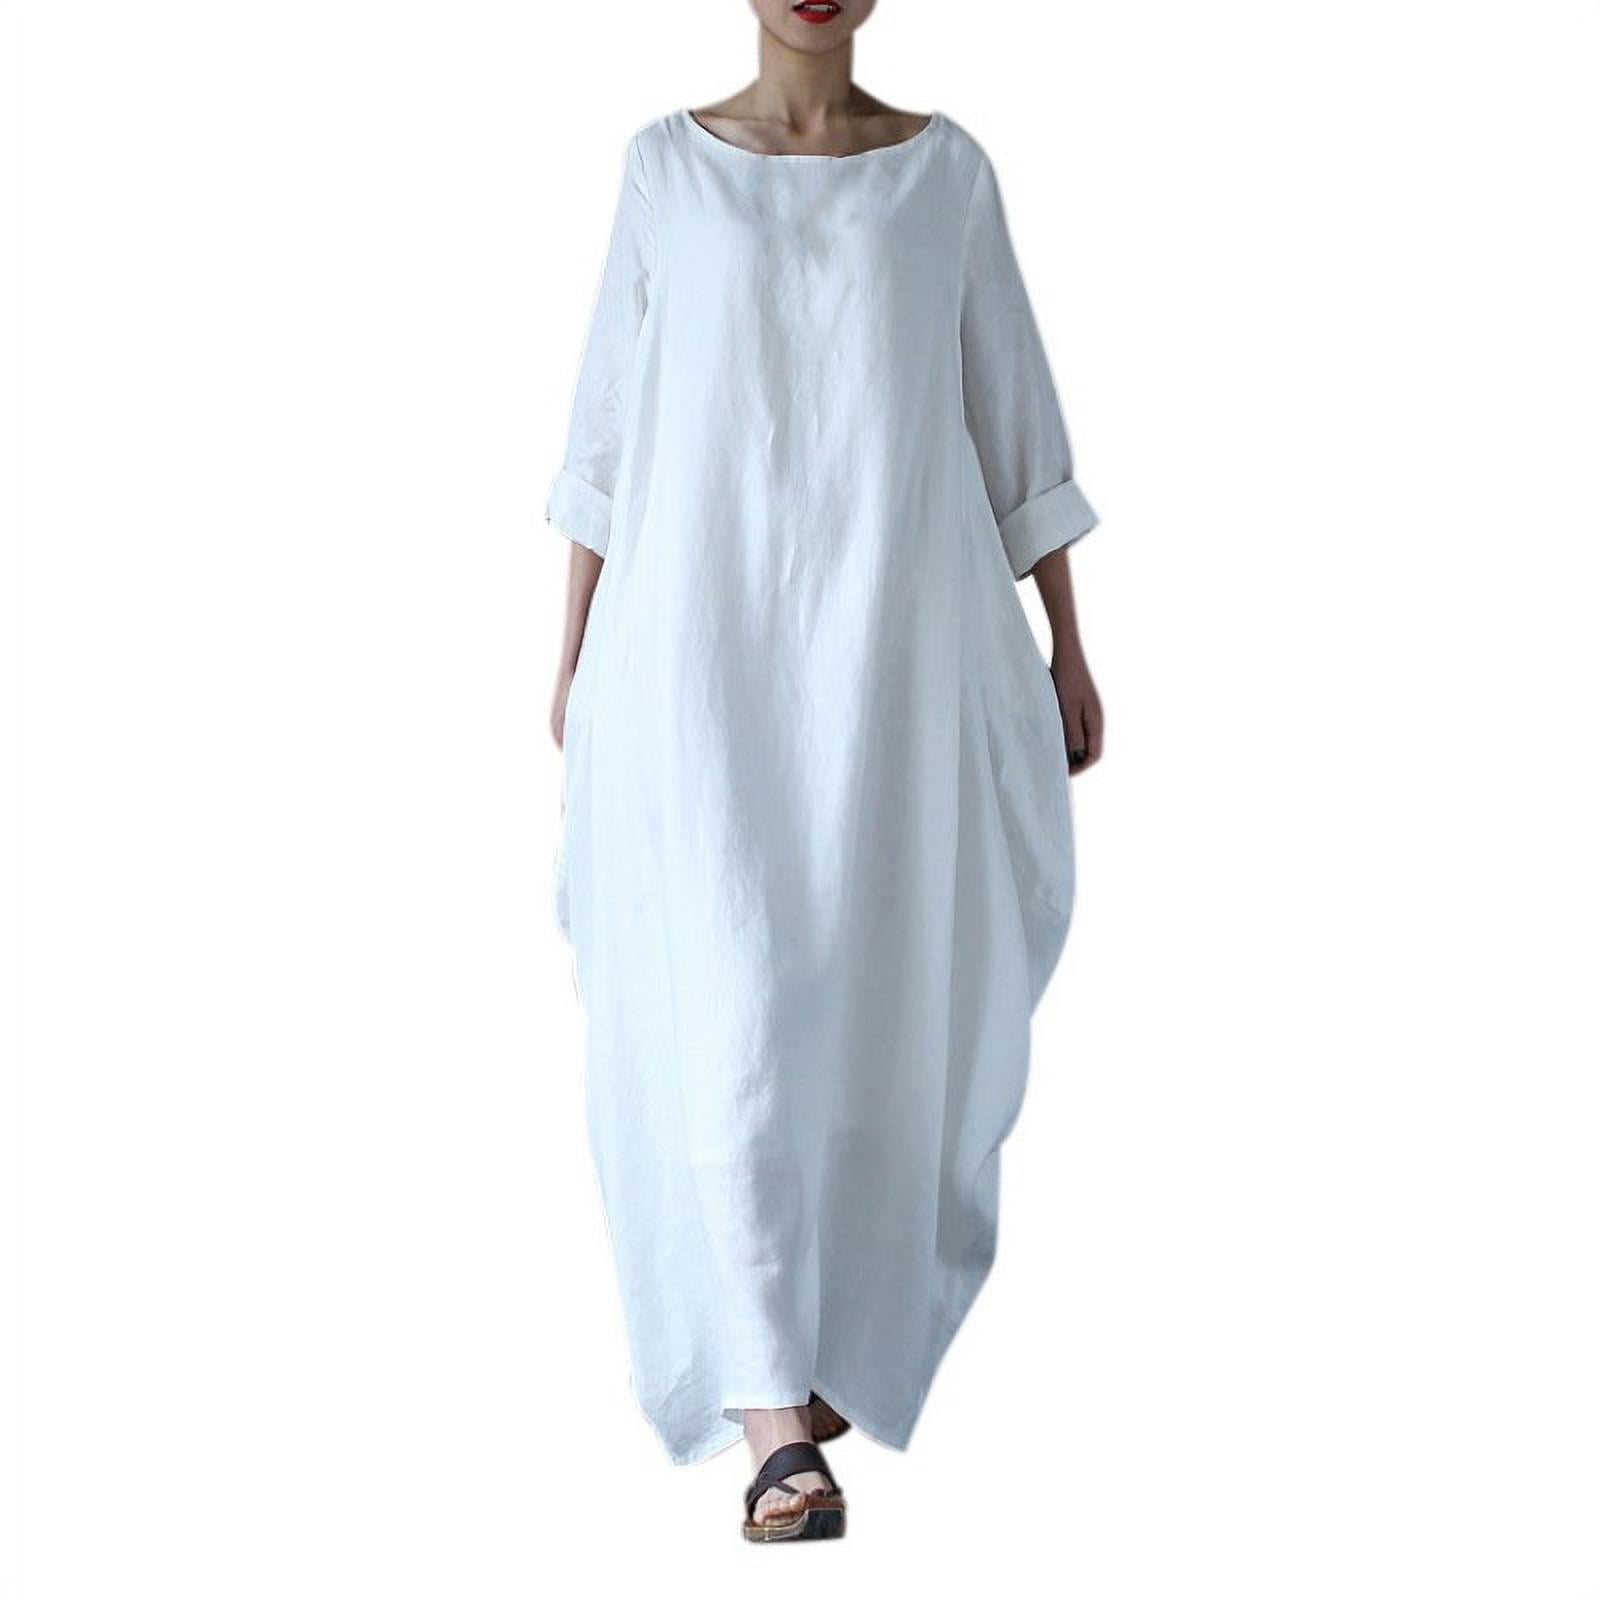 Comfy Ethnic Kaftan Premium Rayon Casual Summer Home Dress,Simple yet Stylis Plus Size